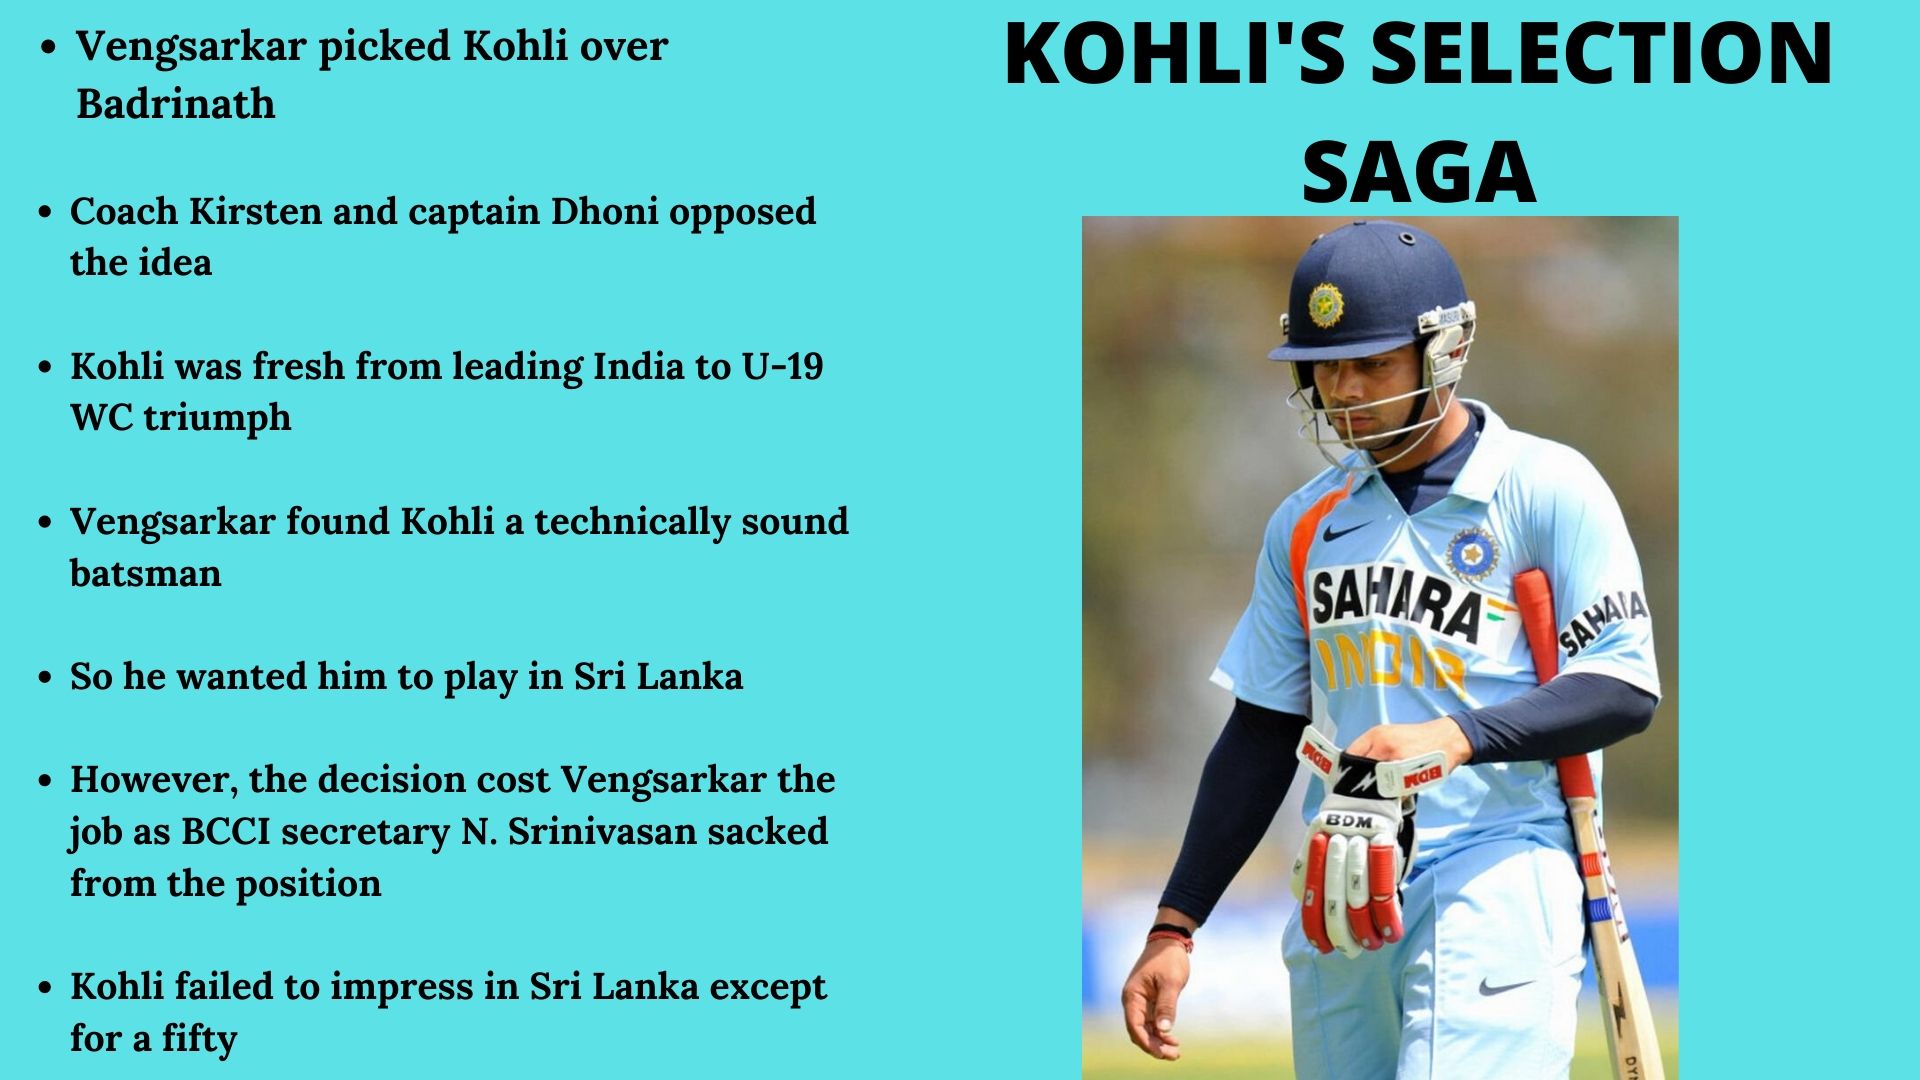 Virat Kohli's selection saga.